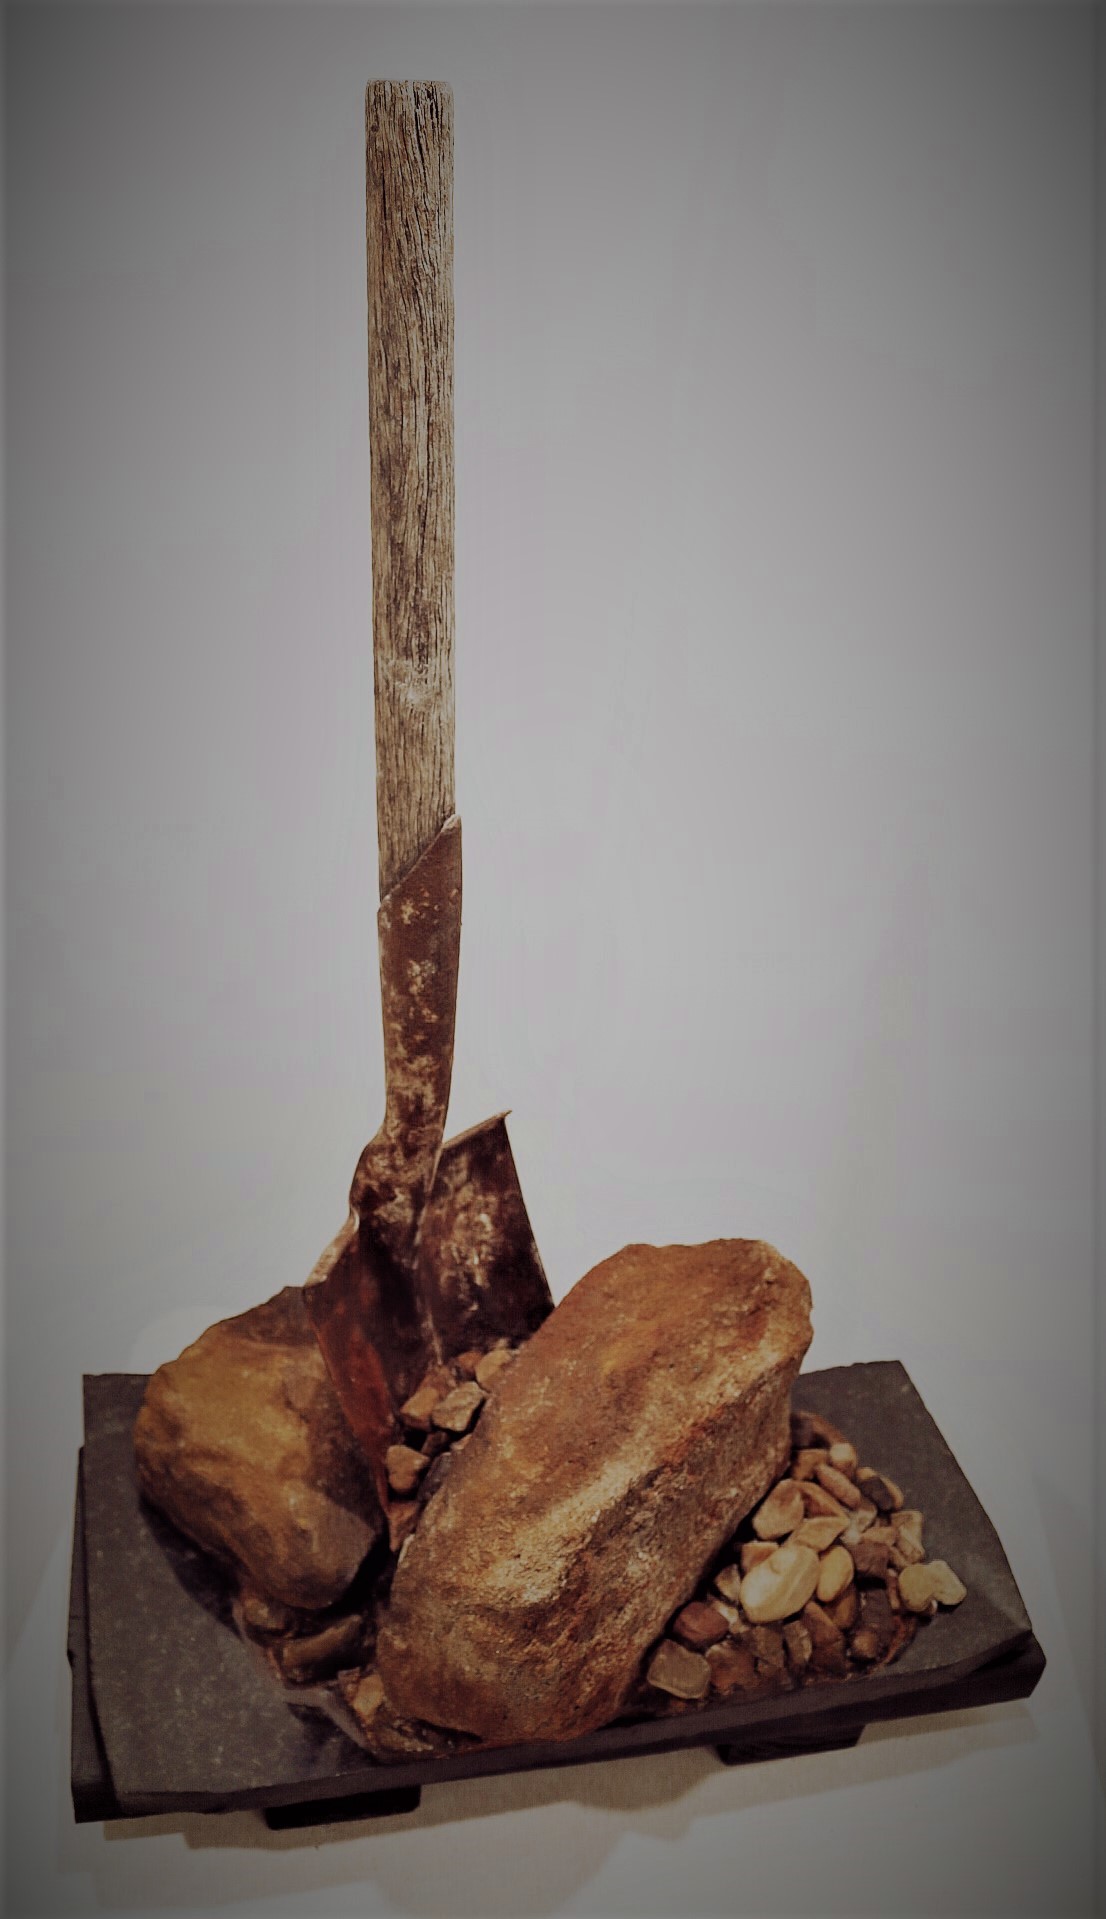 Jacks' Shovel by Marianne Grigore | Lethbridge Landscape Prize 2021 Finalists | Lethbridge Gallery